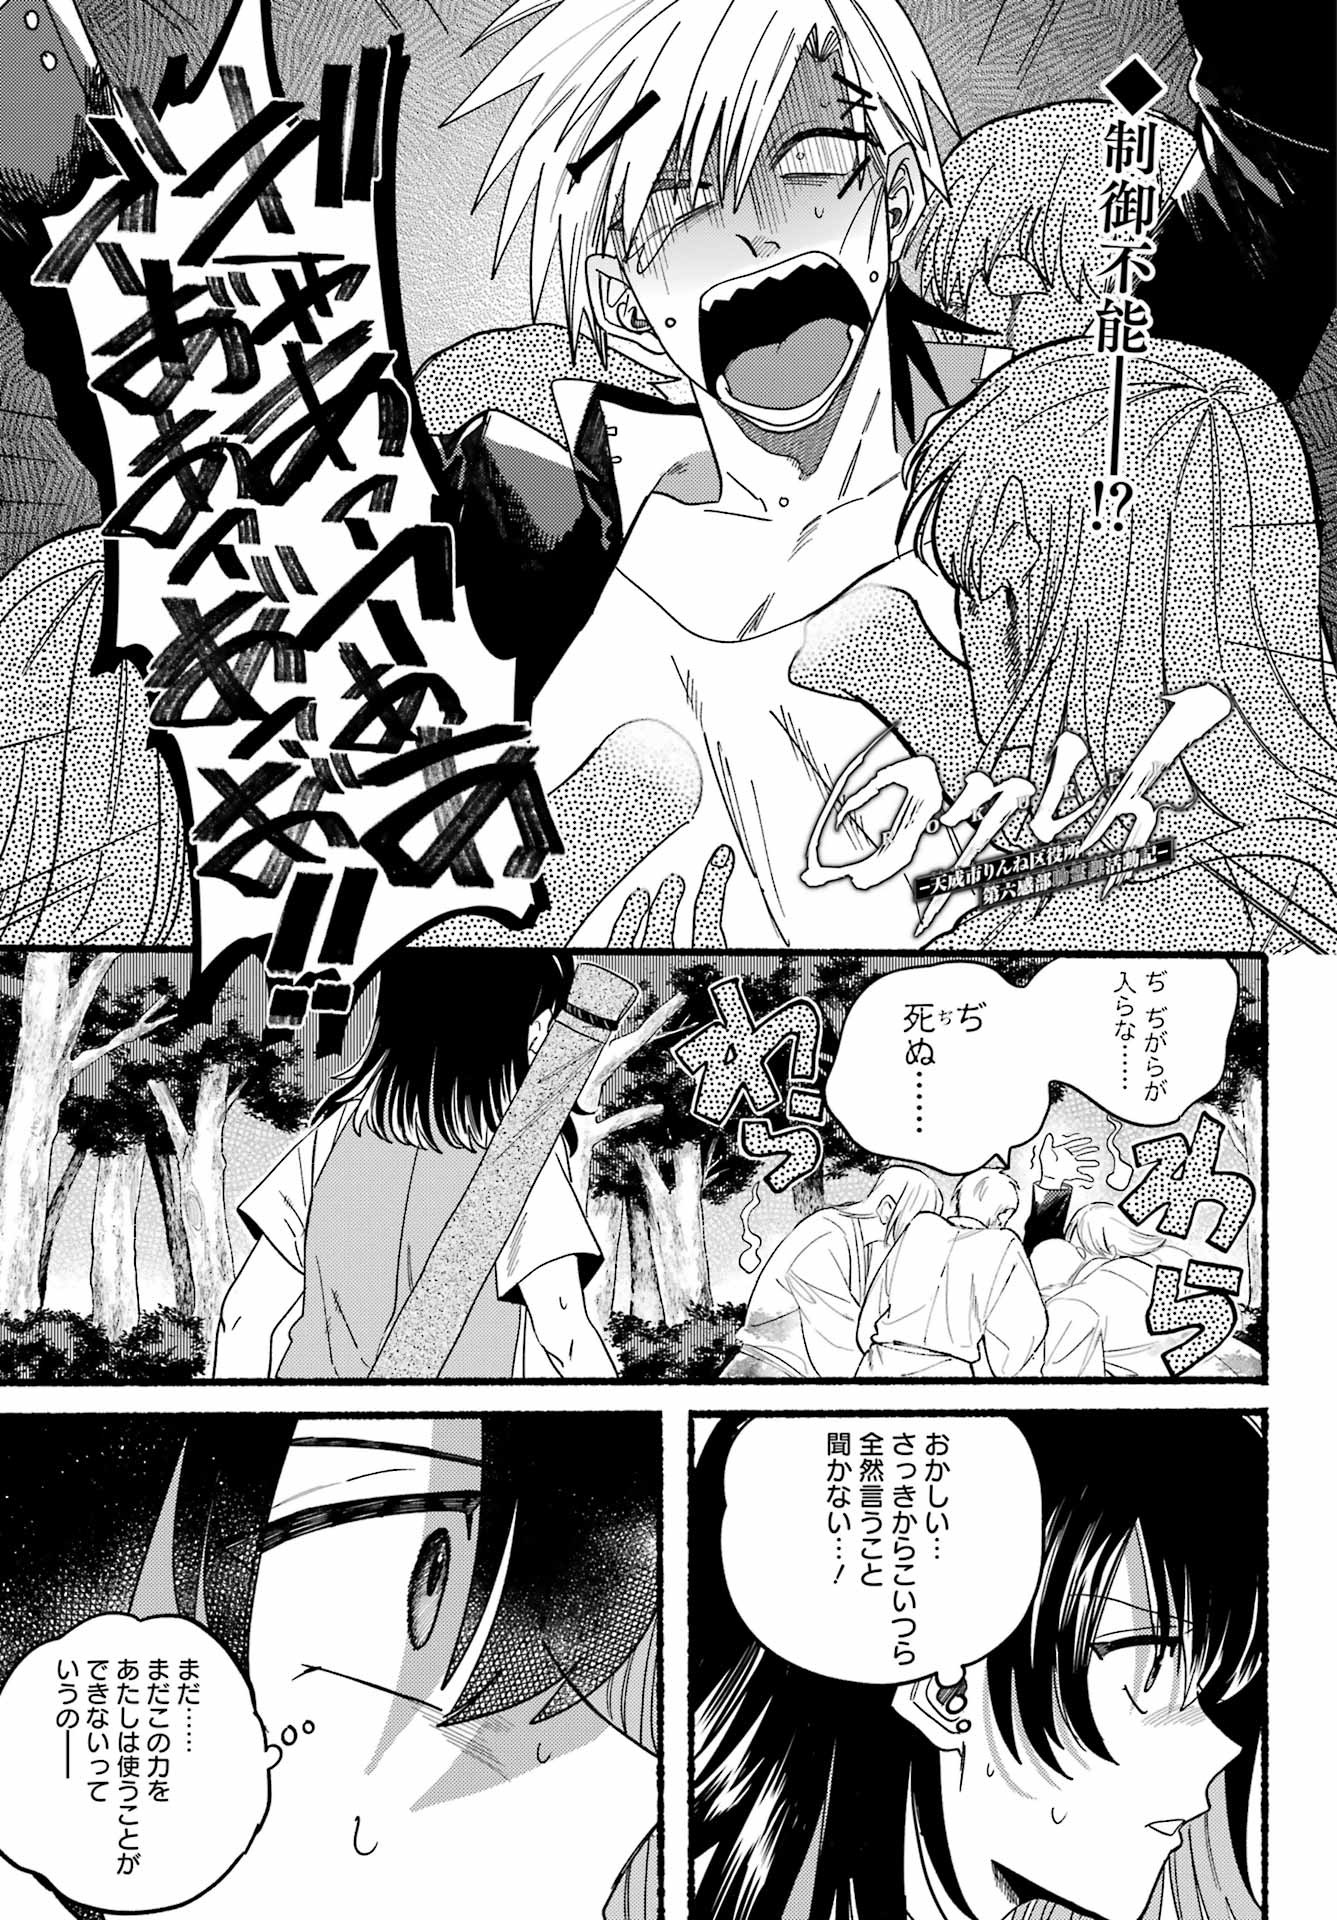 Rokurei - Tenseishi Rinne Kuyakusho Dairokkanbu Joreika Katsudouki - Chapter 13 - Page 1